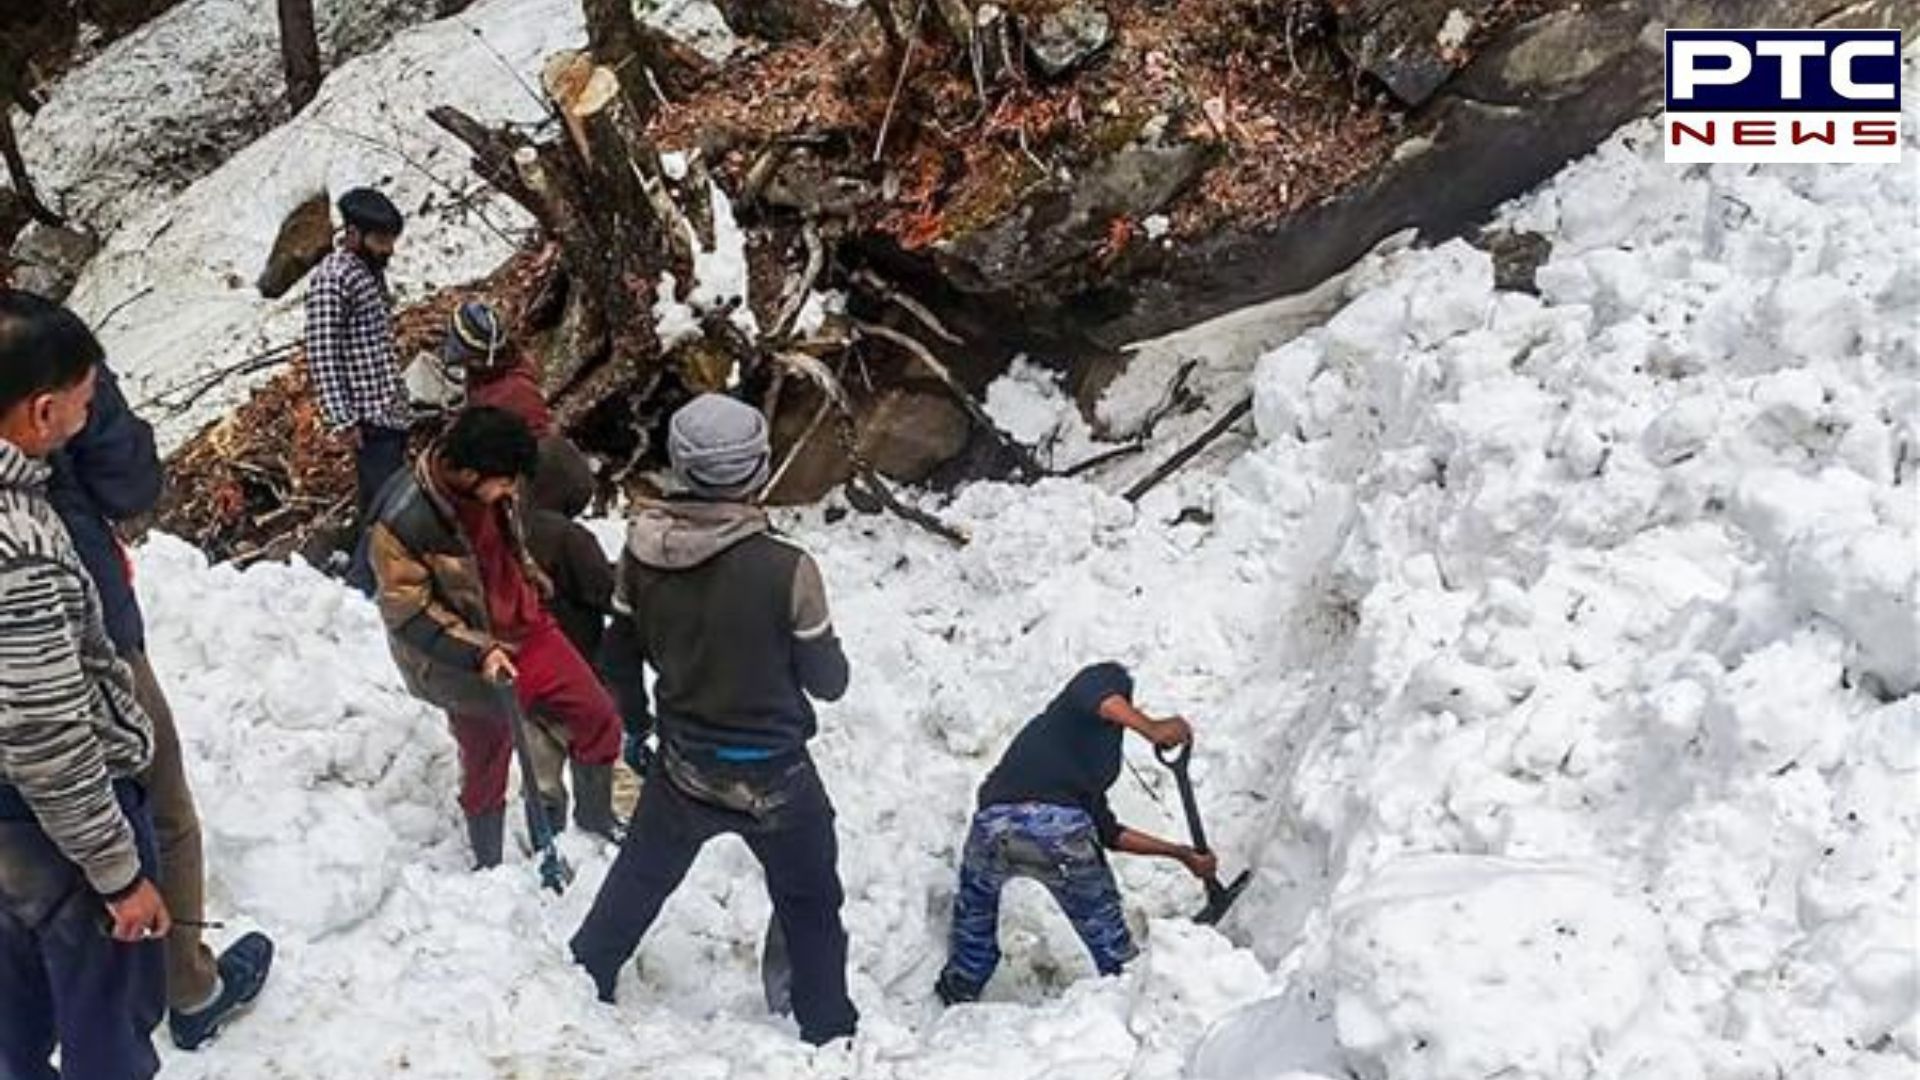 Snow and rainfall prompt closure of 168 roads across Himachal Pradesh